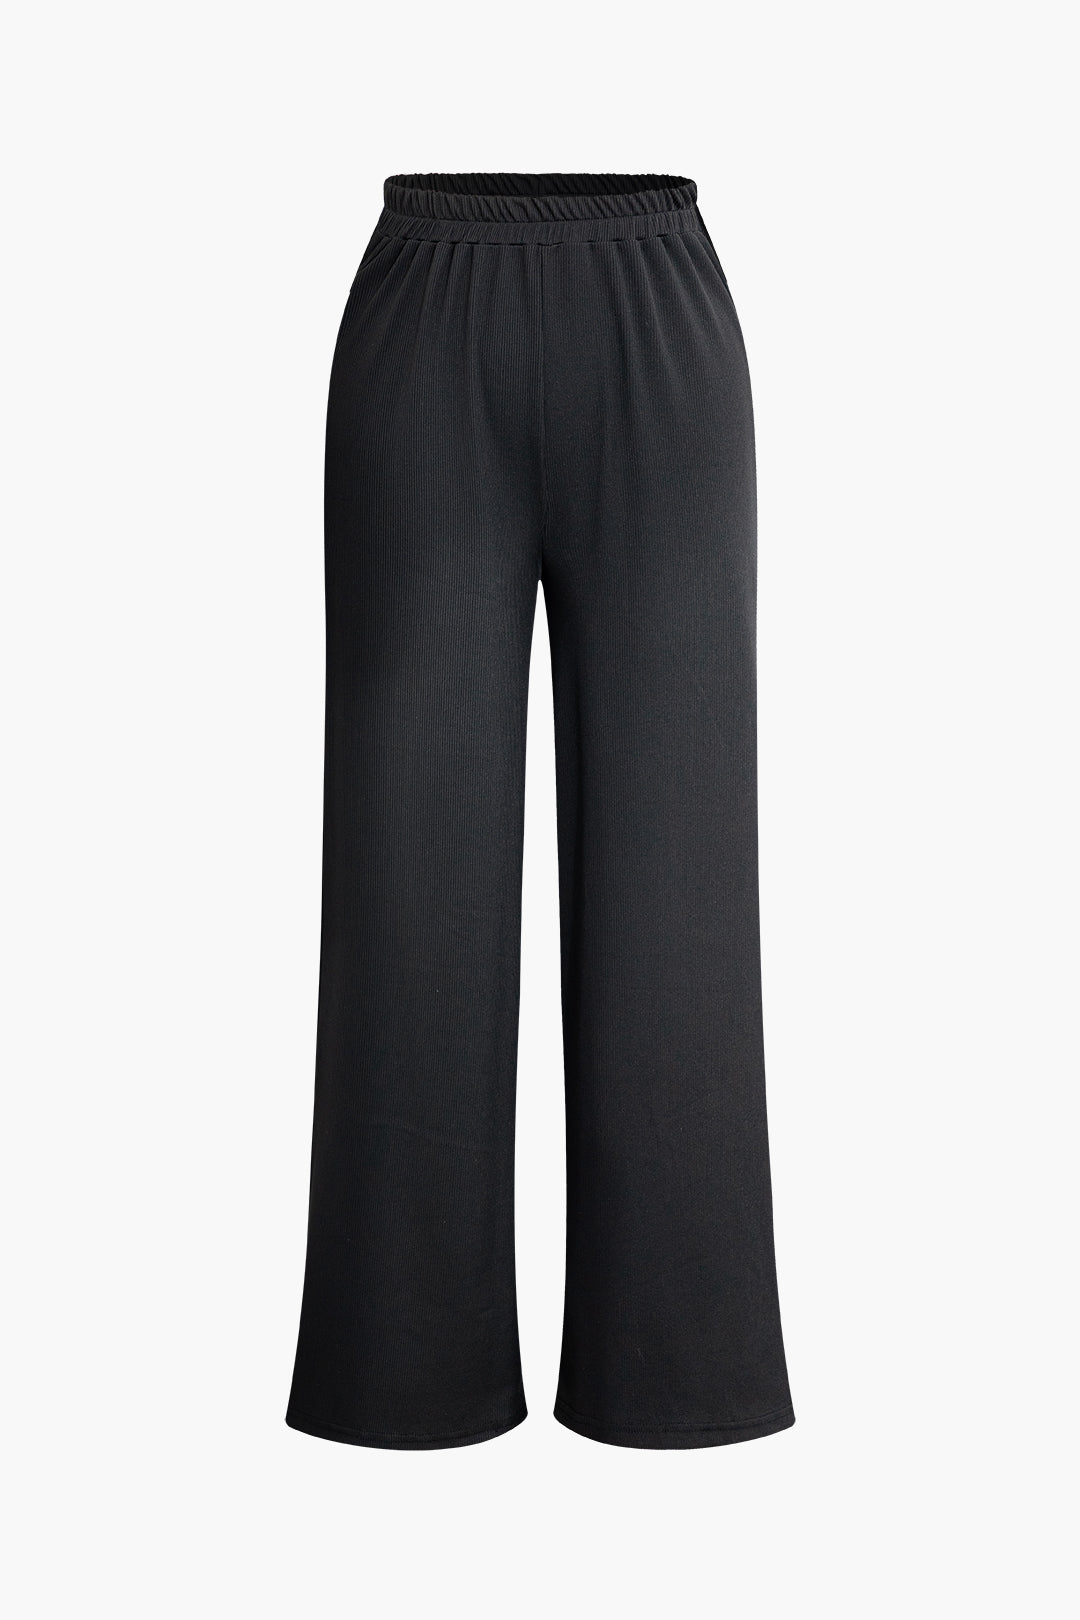 Solid Crop Top And Elastic Waist Straight Leg Pants Set